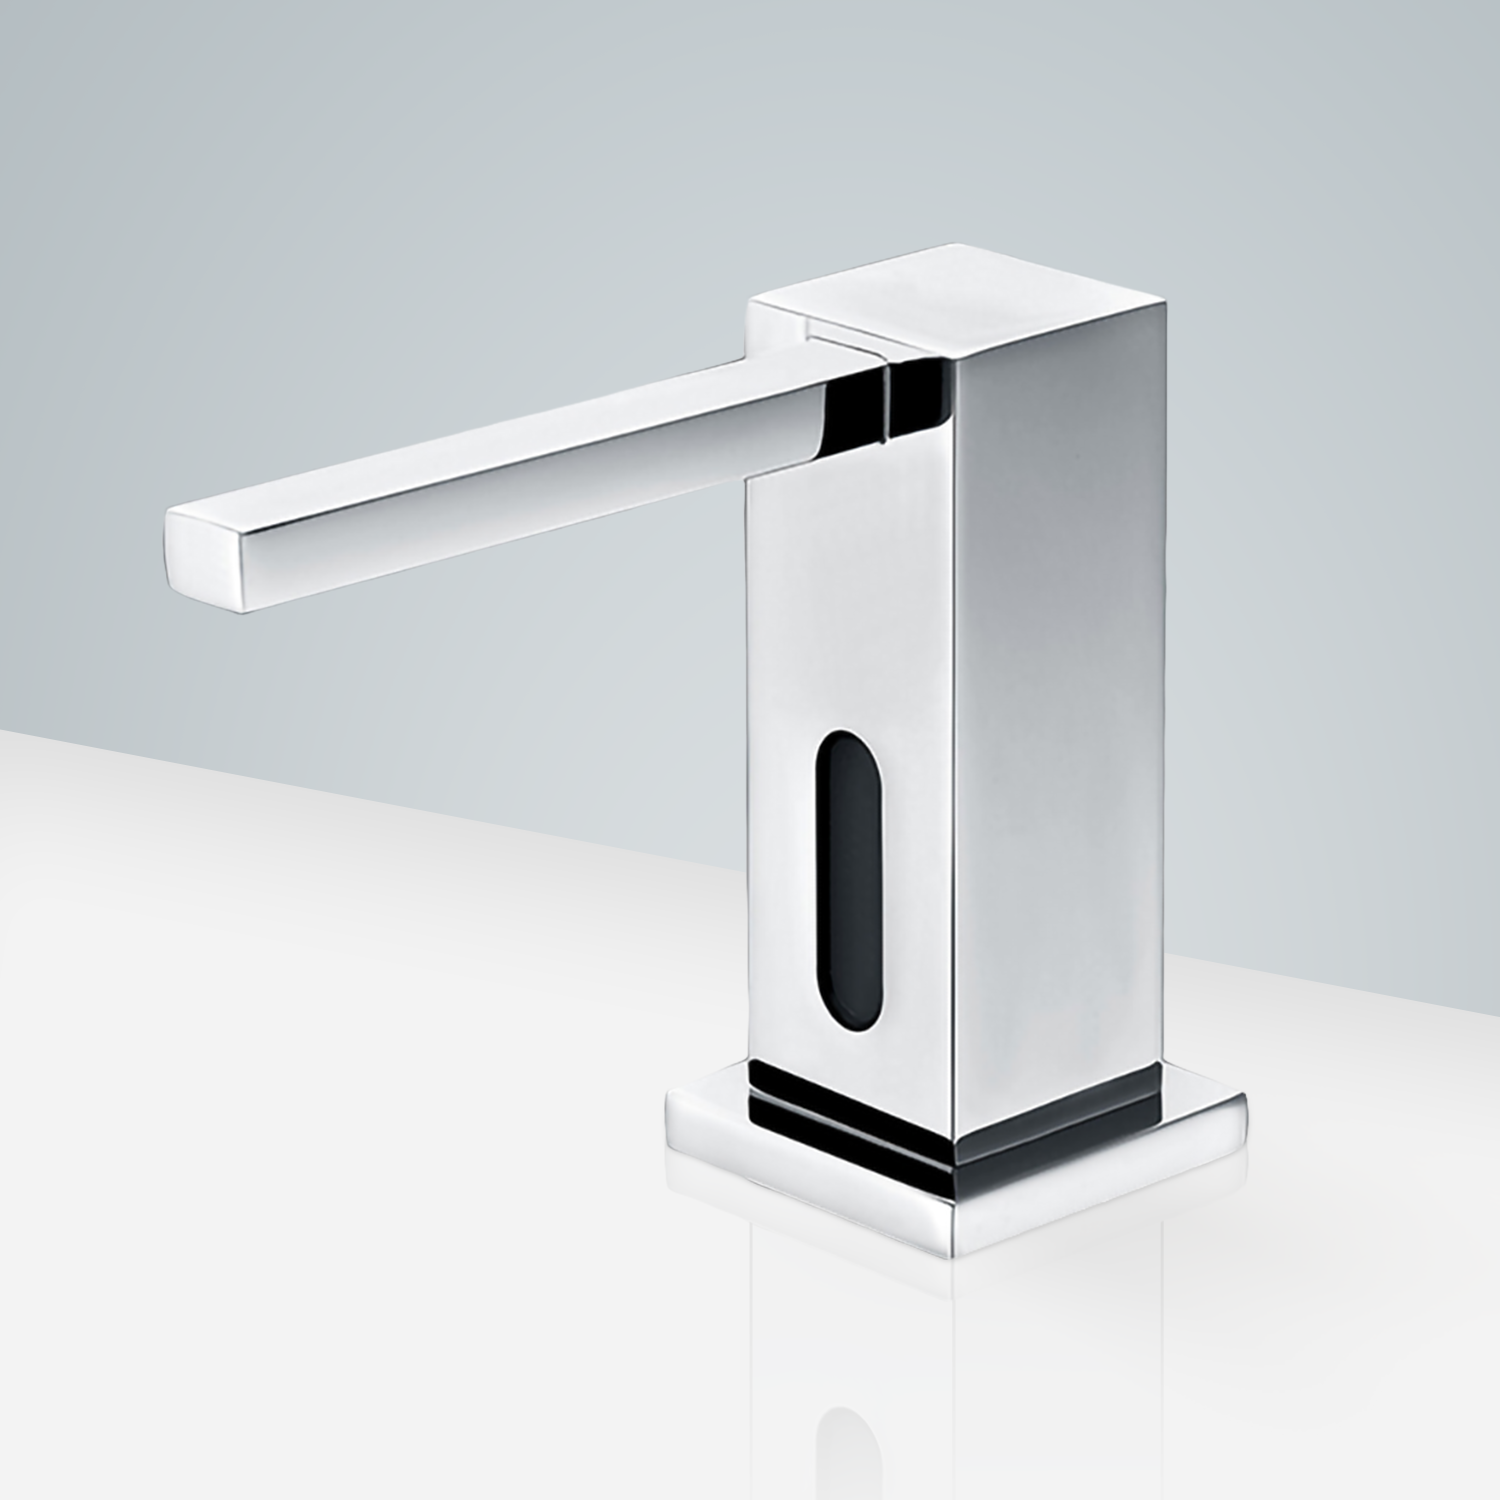 BathSelect Napoli Commercial Hands Free Automatic Sensor Commercial Liquid Soap Dispenser